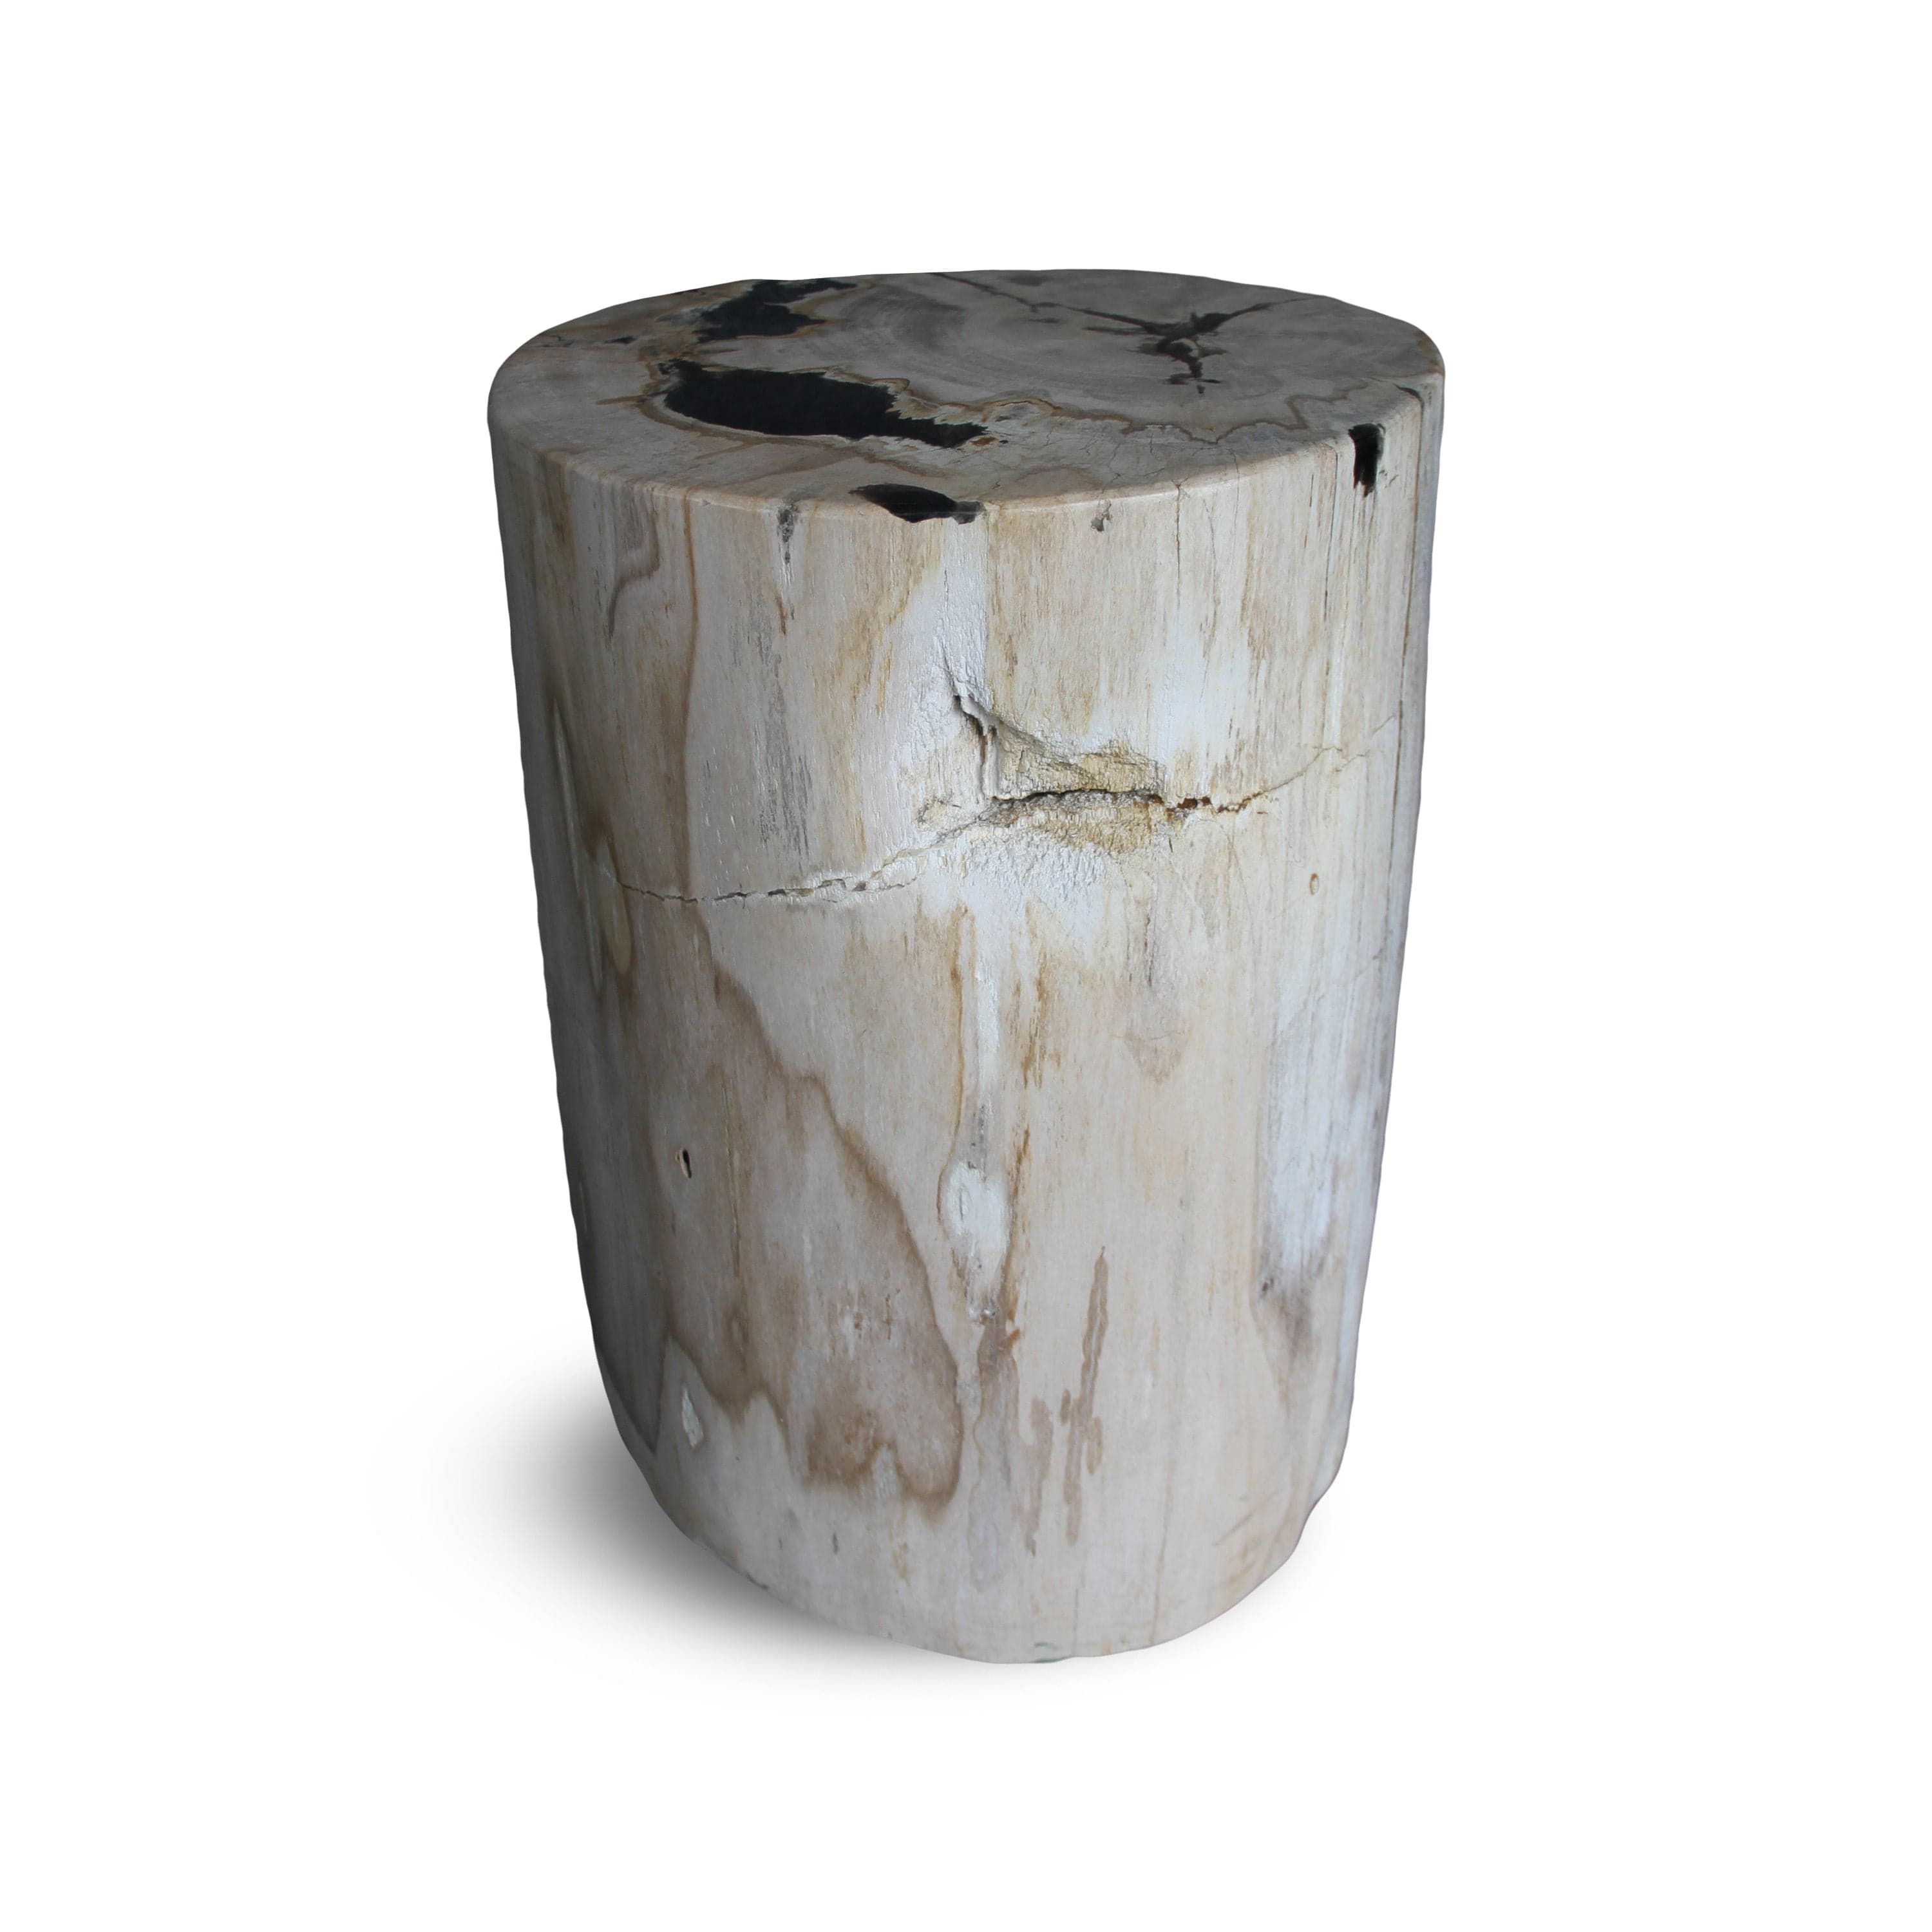 Kalifano Petrified Wood Petrified Wood Round Stump / Stool from Indonesia - 17" / 141 lbs PWS2600.008